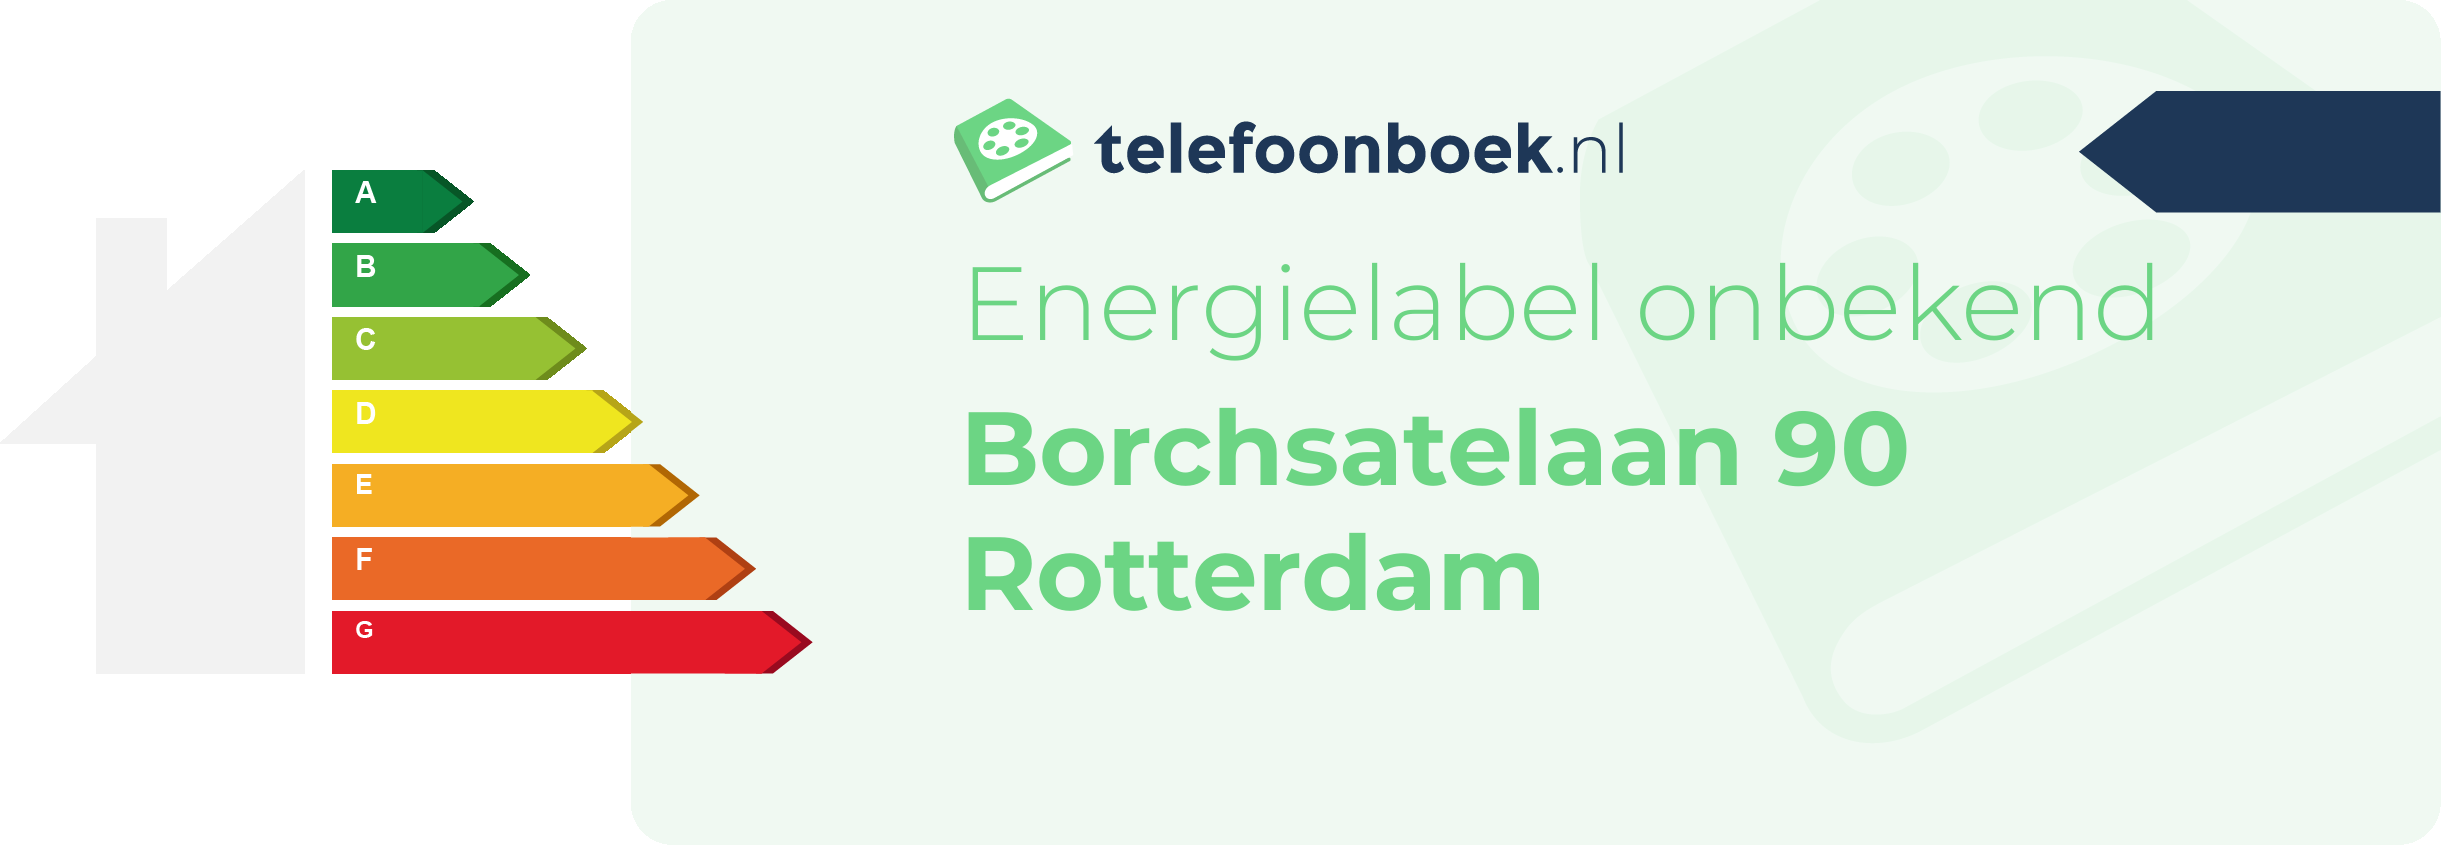 Energielabel Borchsatelaan 90 Rotterdam